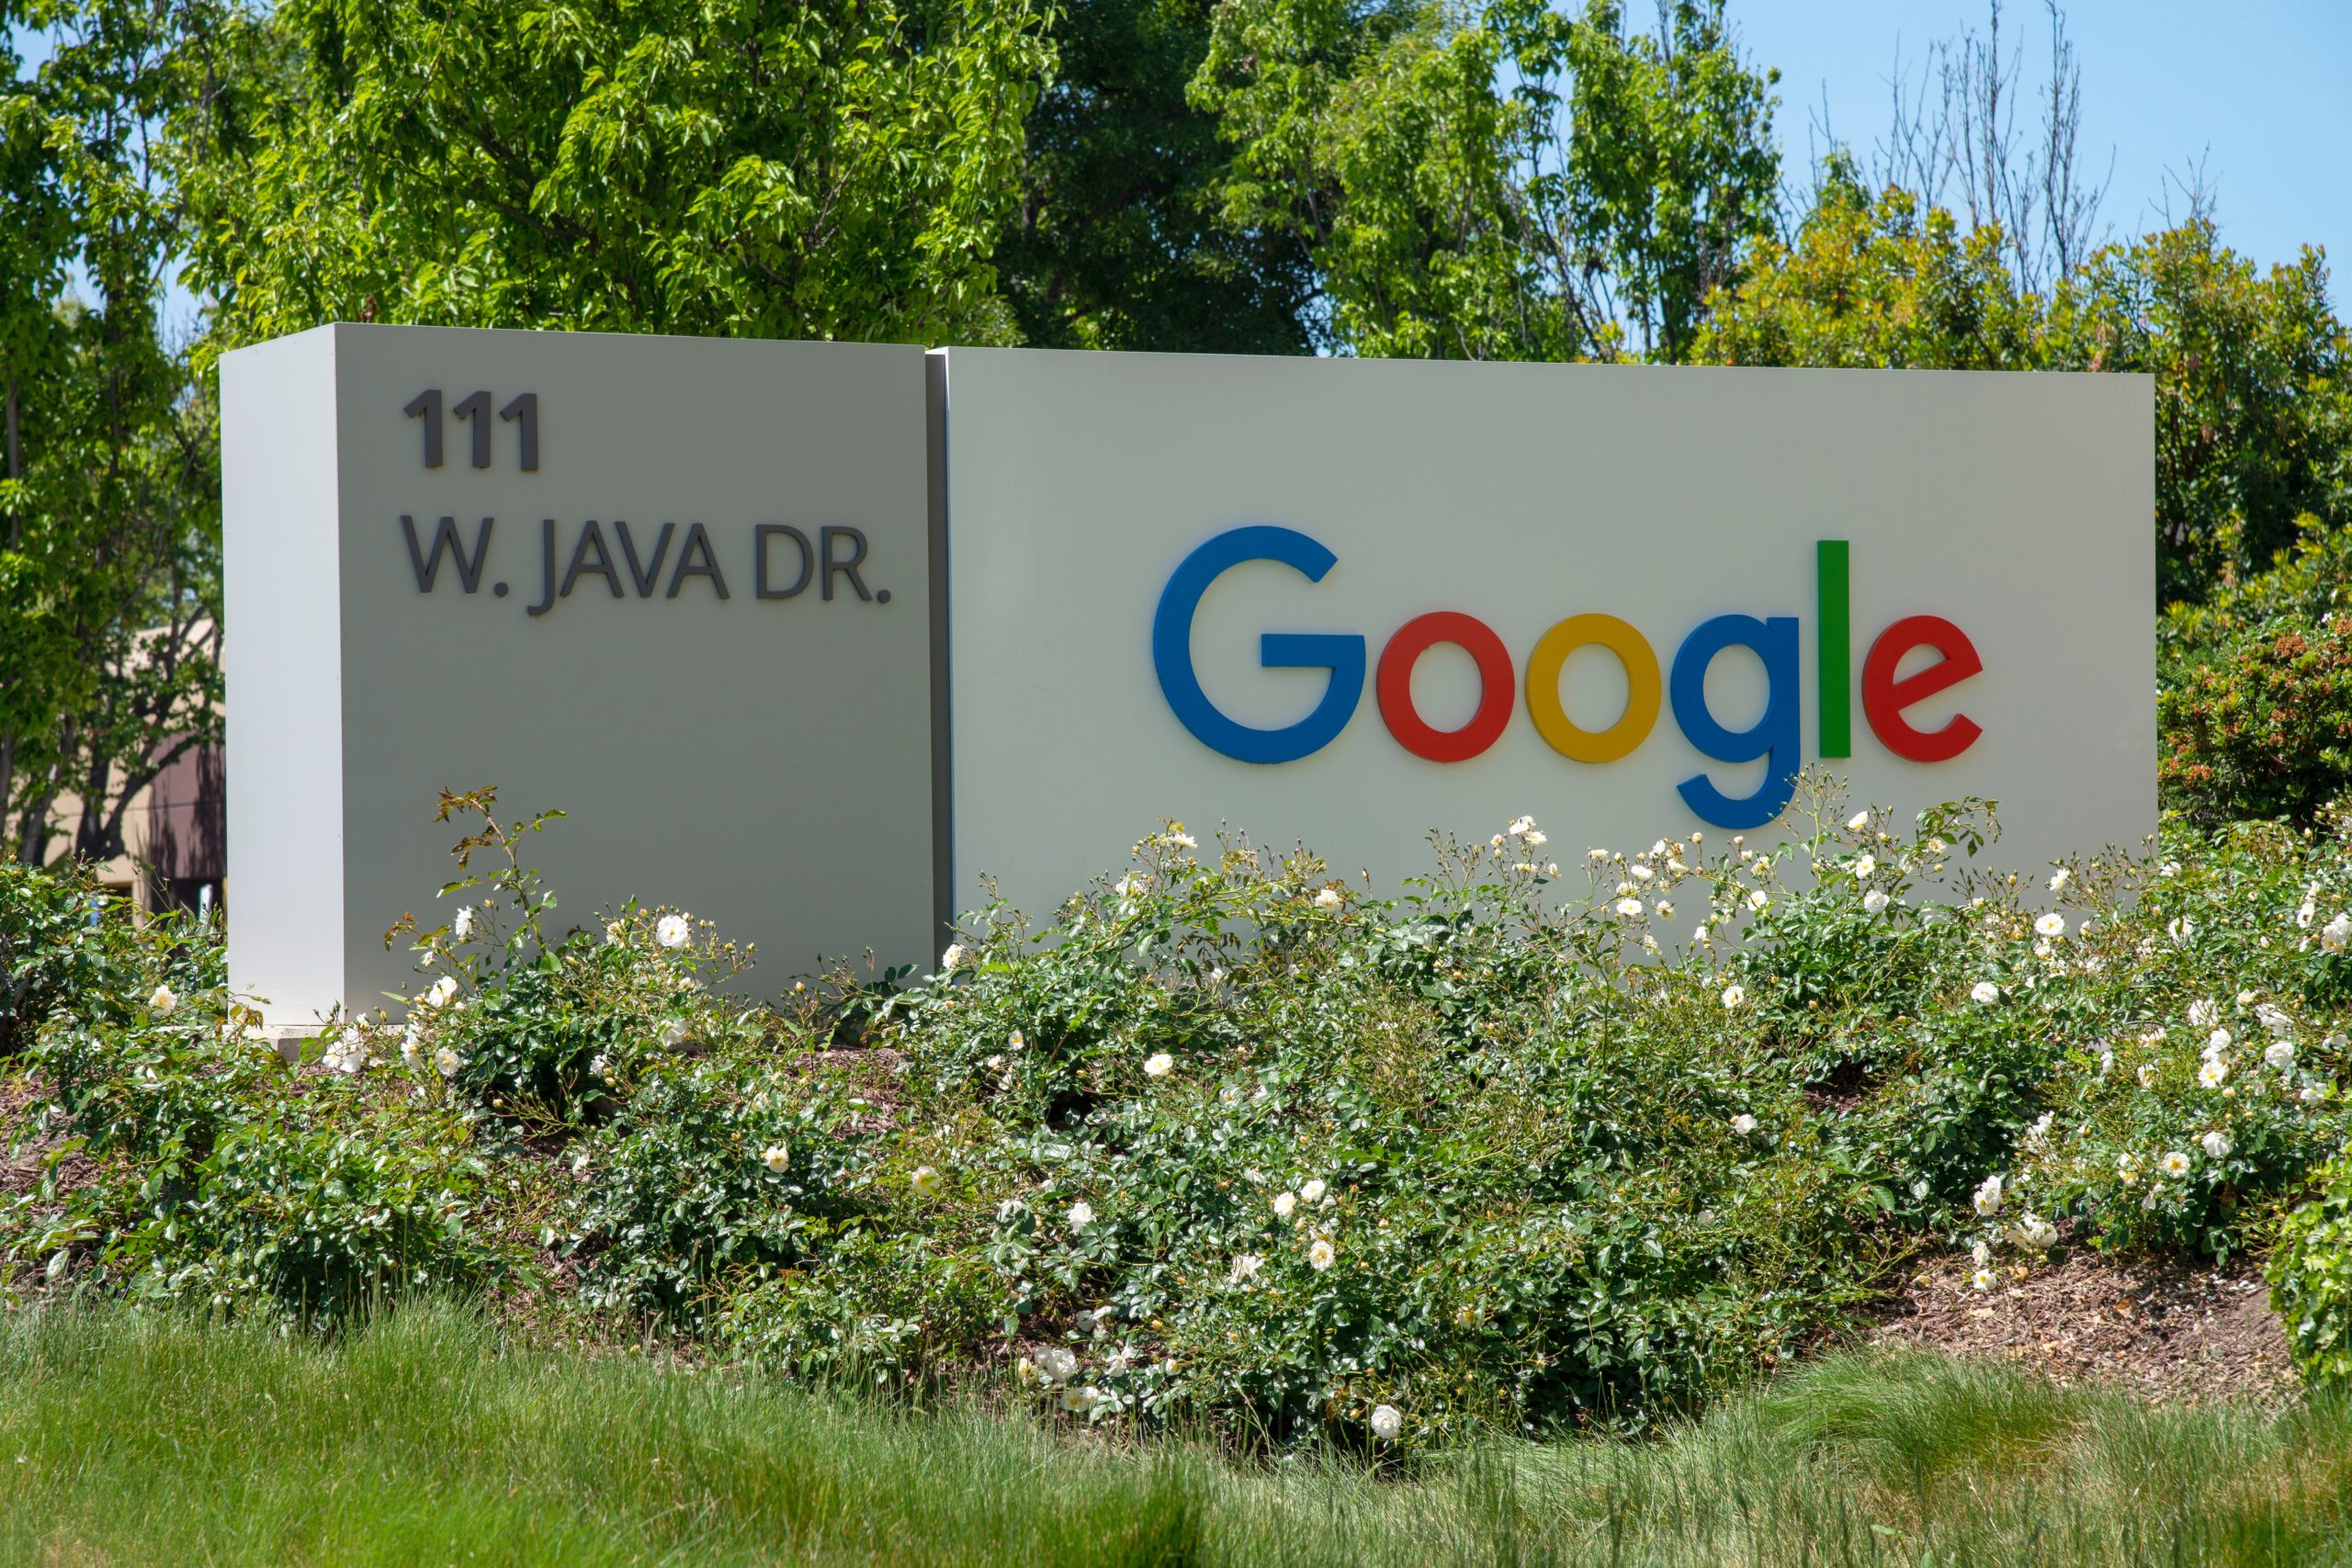 Google: Εφαρμόζουν «σπριντ απλότητας» για τους εργαζόμενους – Ο CEO τους ζητά να είναι πιο παραγωγικοί